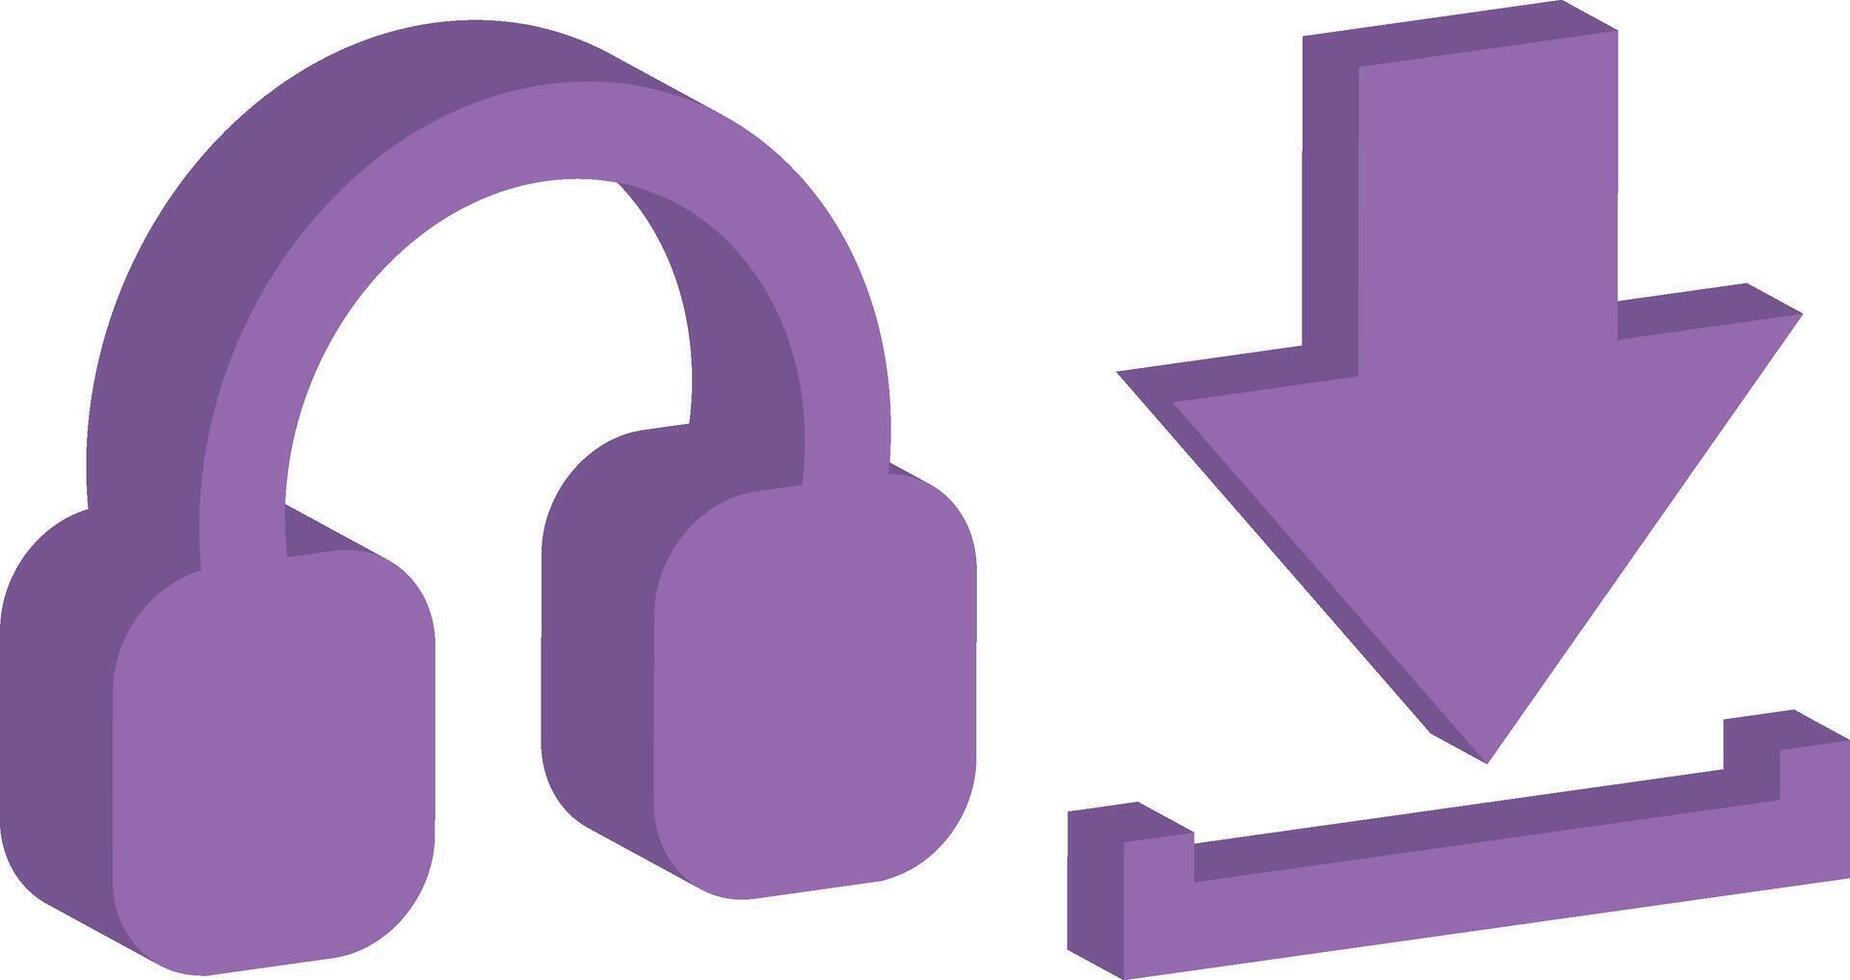 auricular icono y descargar icono, en púrpura tonos, 3d vector, botón vector